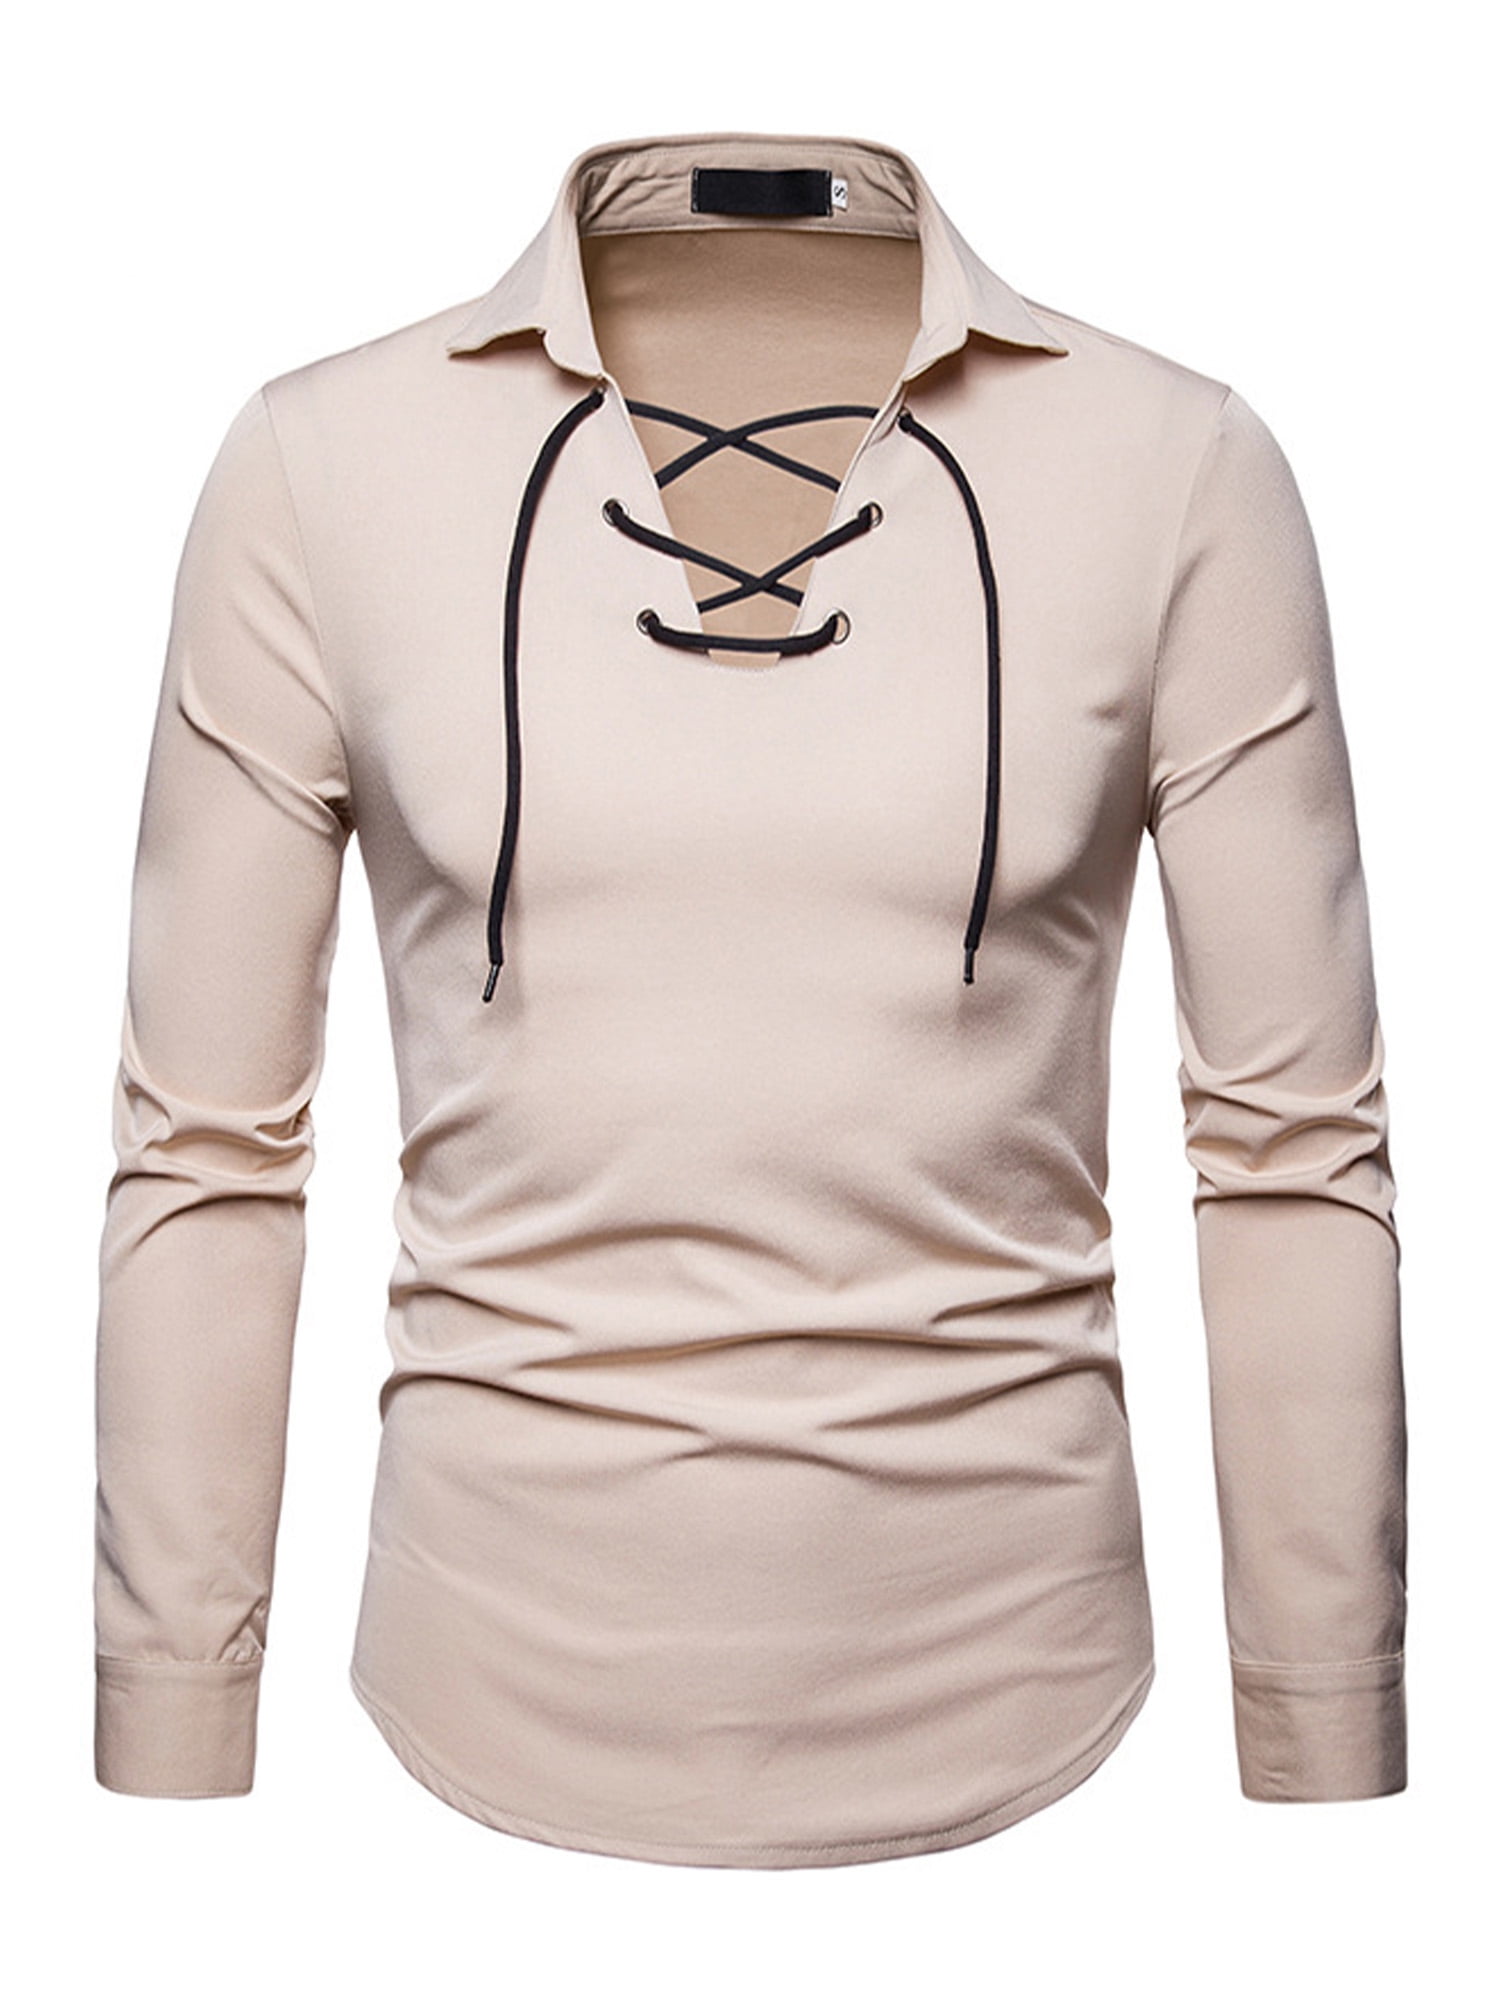 Jacobite Ghillie Shirt for Kilts Men’s Long Sleeve Shirt w/Leather Tie 